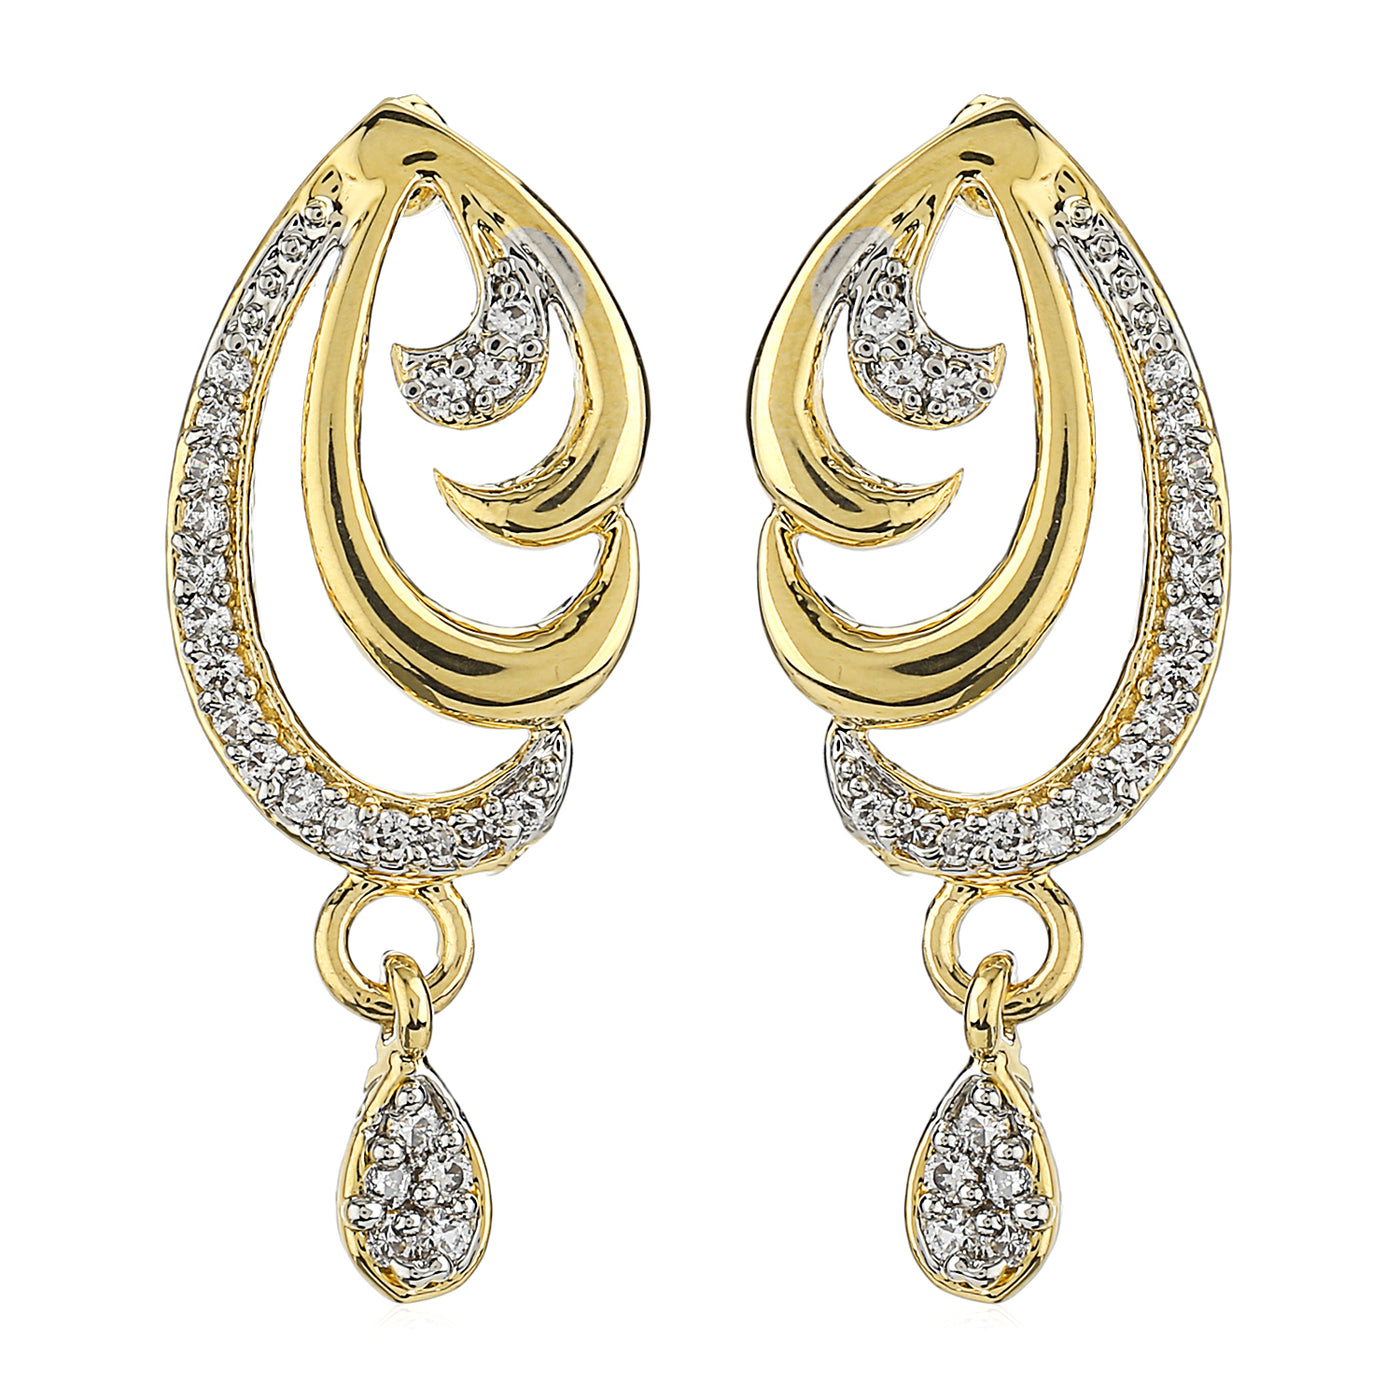 Diamond Earrings With Ruby Stones Set